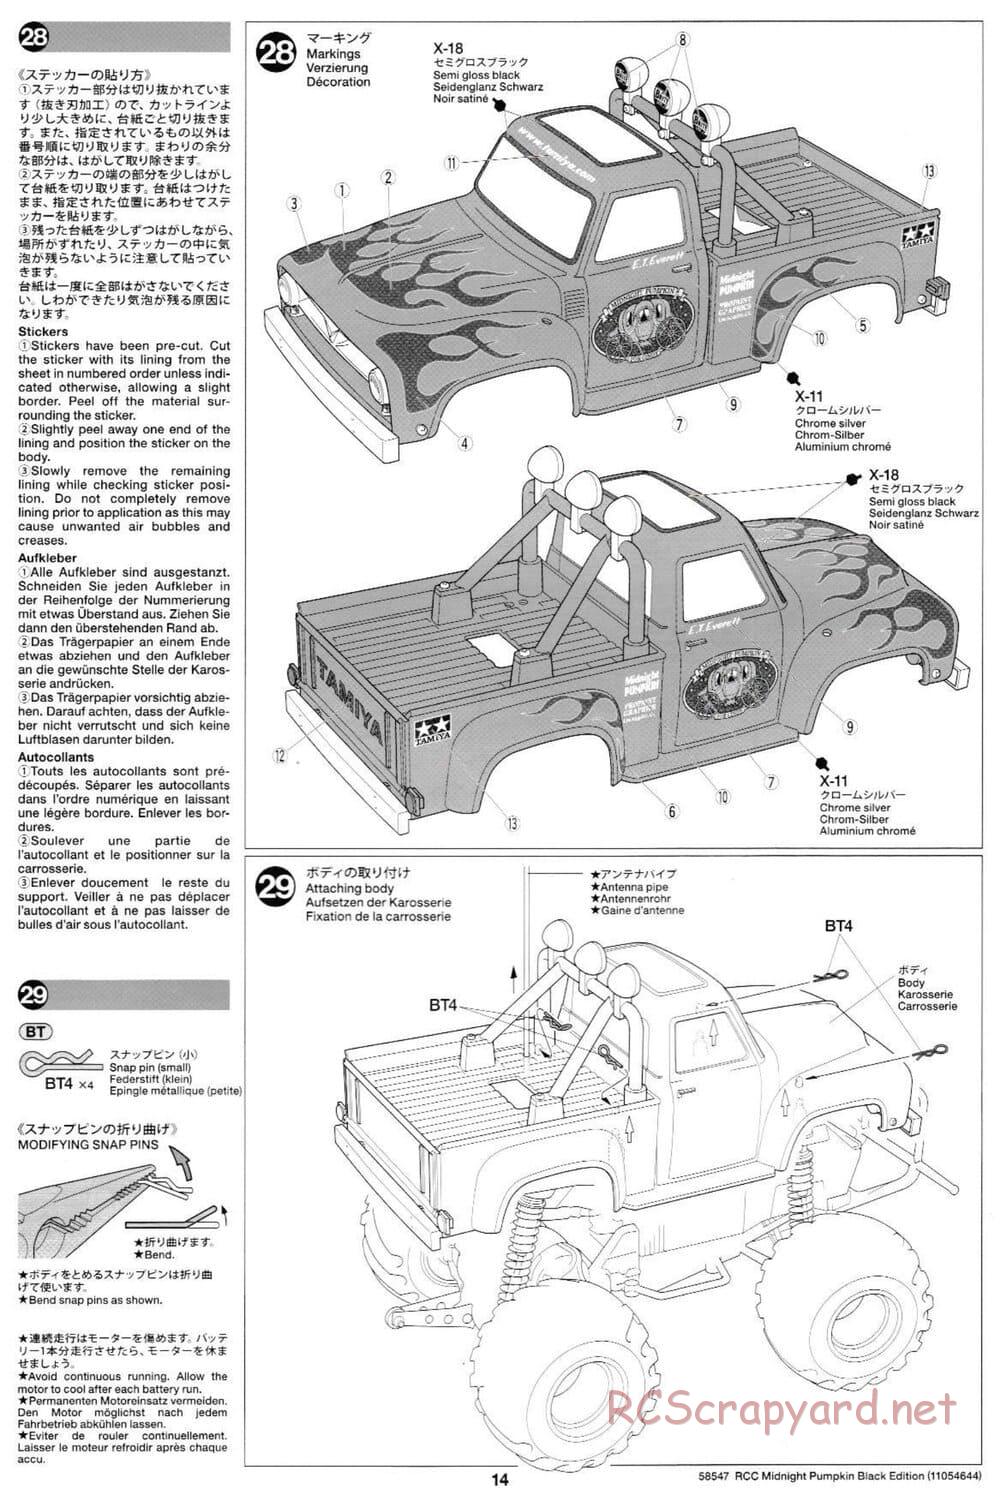 Tamiya - Midnight Pumpkin - Black Edition - CW-01 Chassis - Manual - Page 14